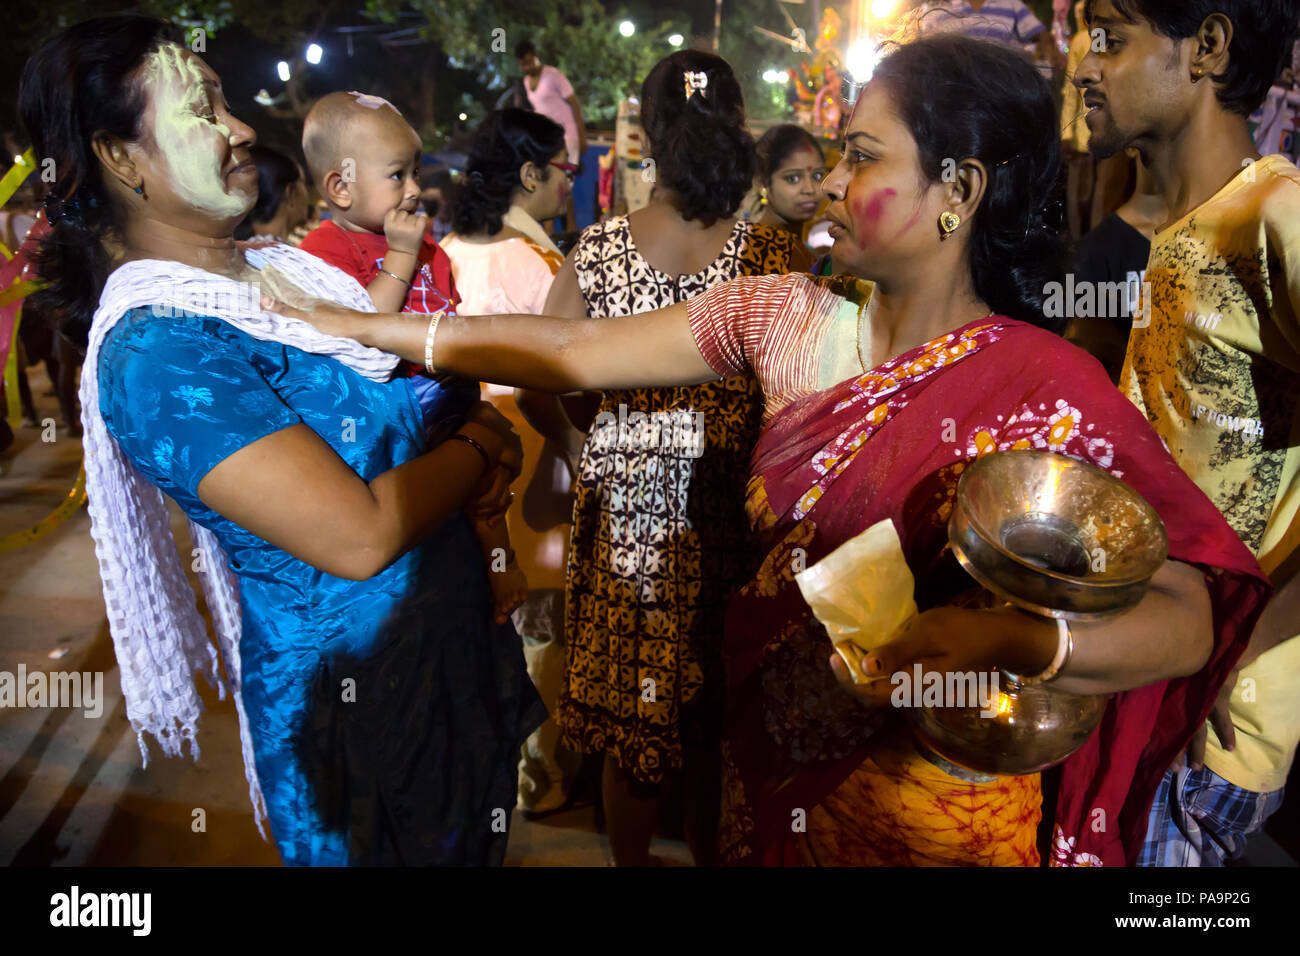 People and crowd during Durga puja celebration in Kolkata, India Stock Photo